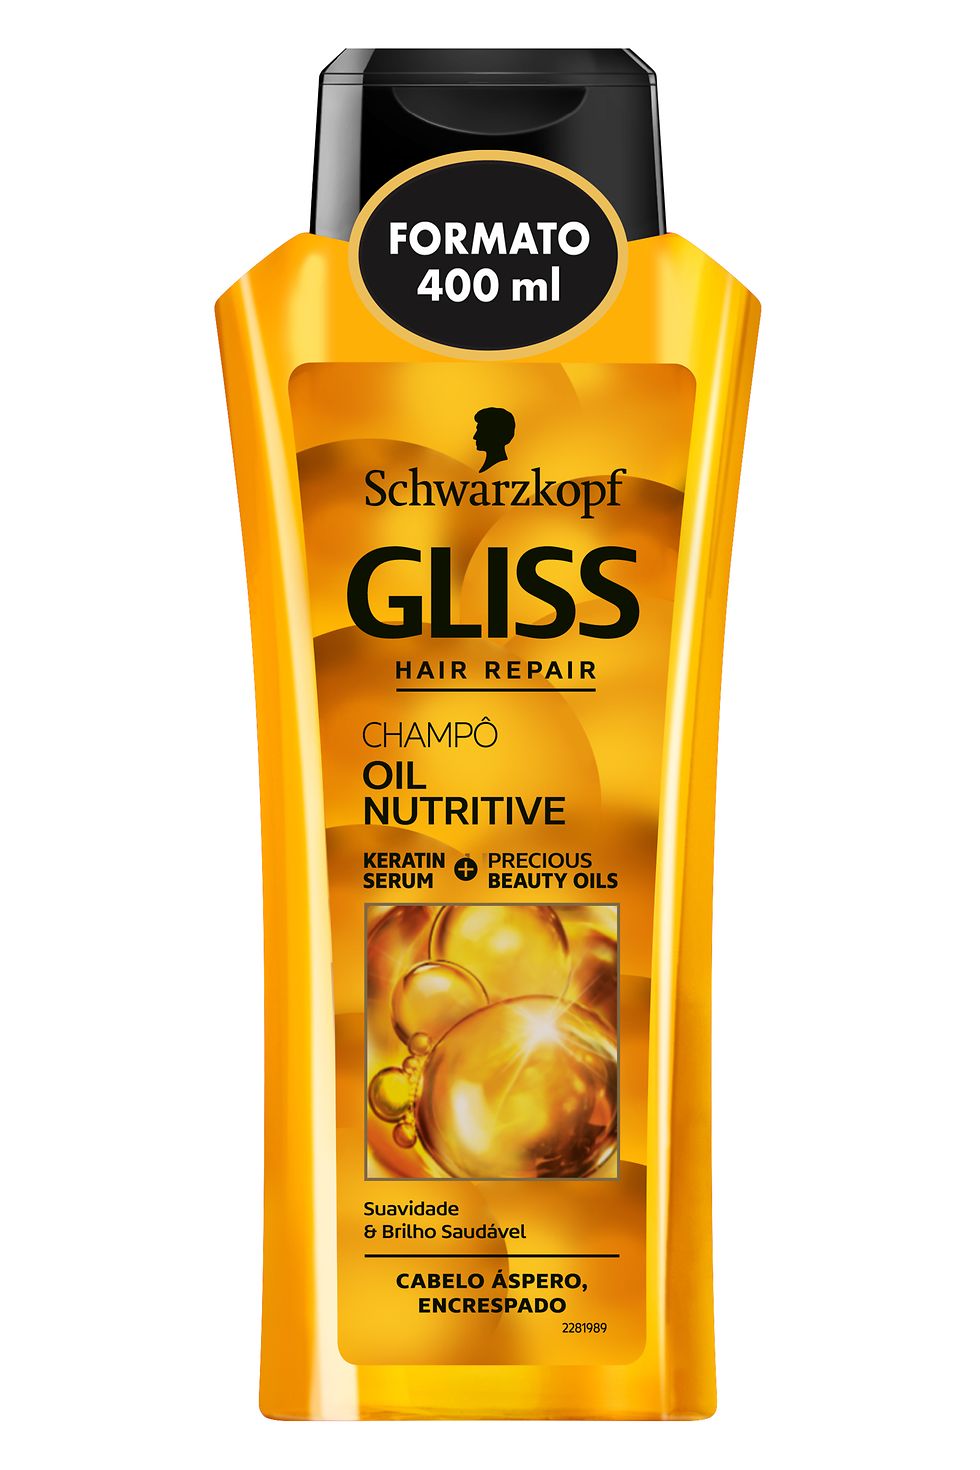 GLISS OIL NUTRITIVE Champô 400ml